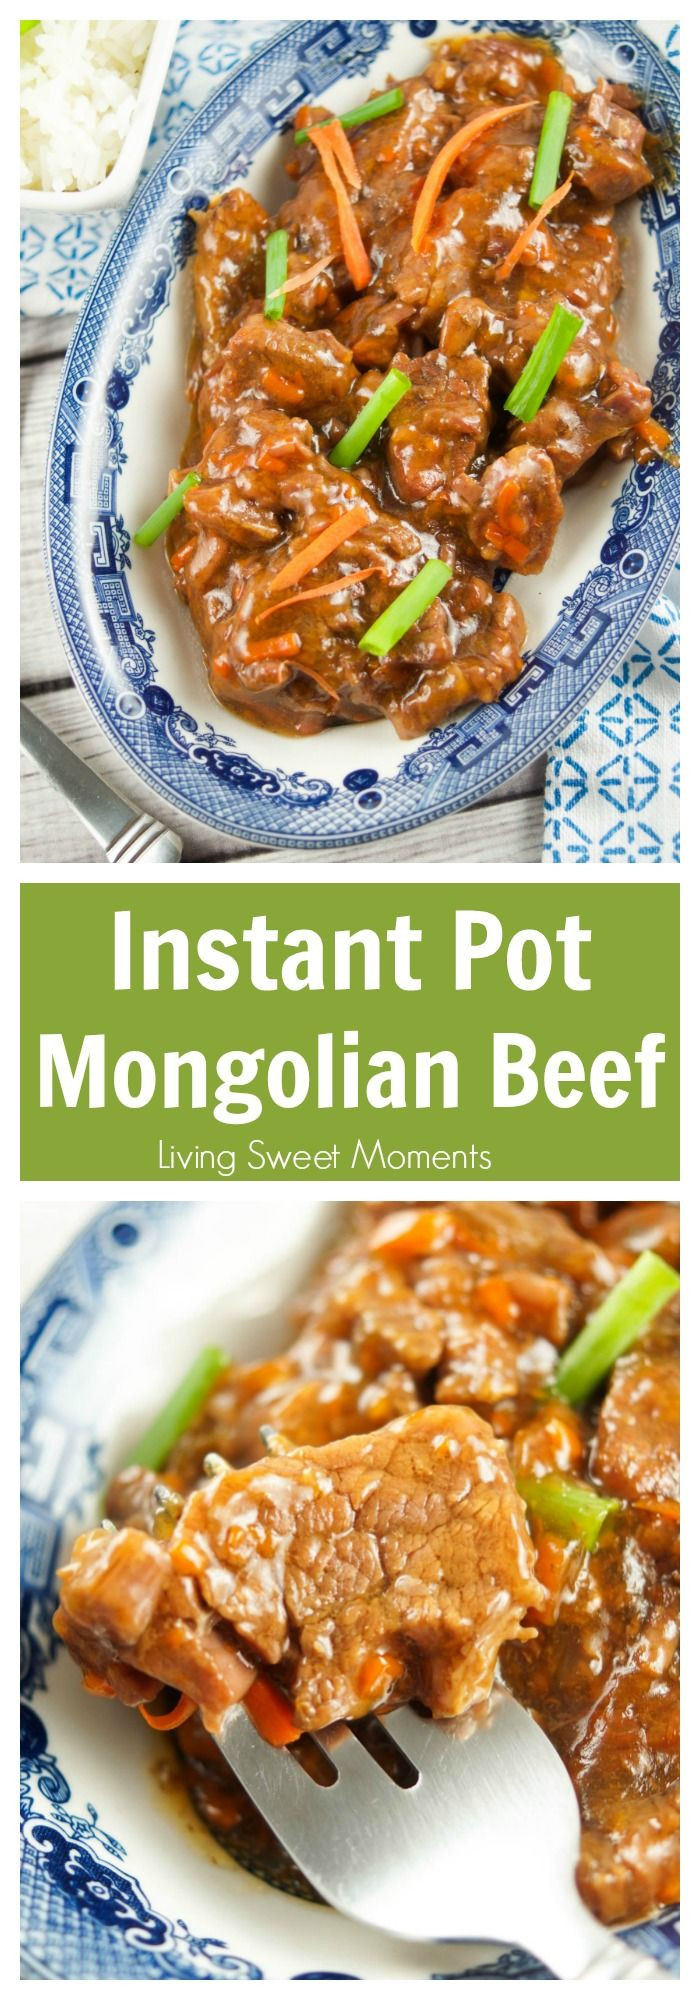 Instant Pot Flank Steak Recipes
 60 best images about Instant Pot Recipes on Pinterest